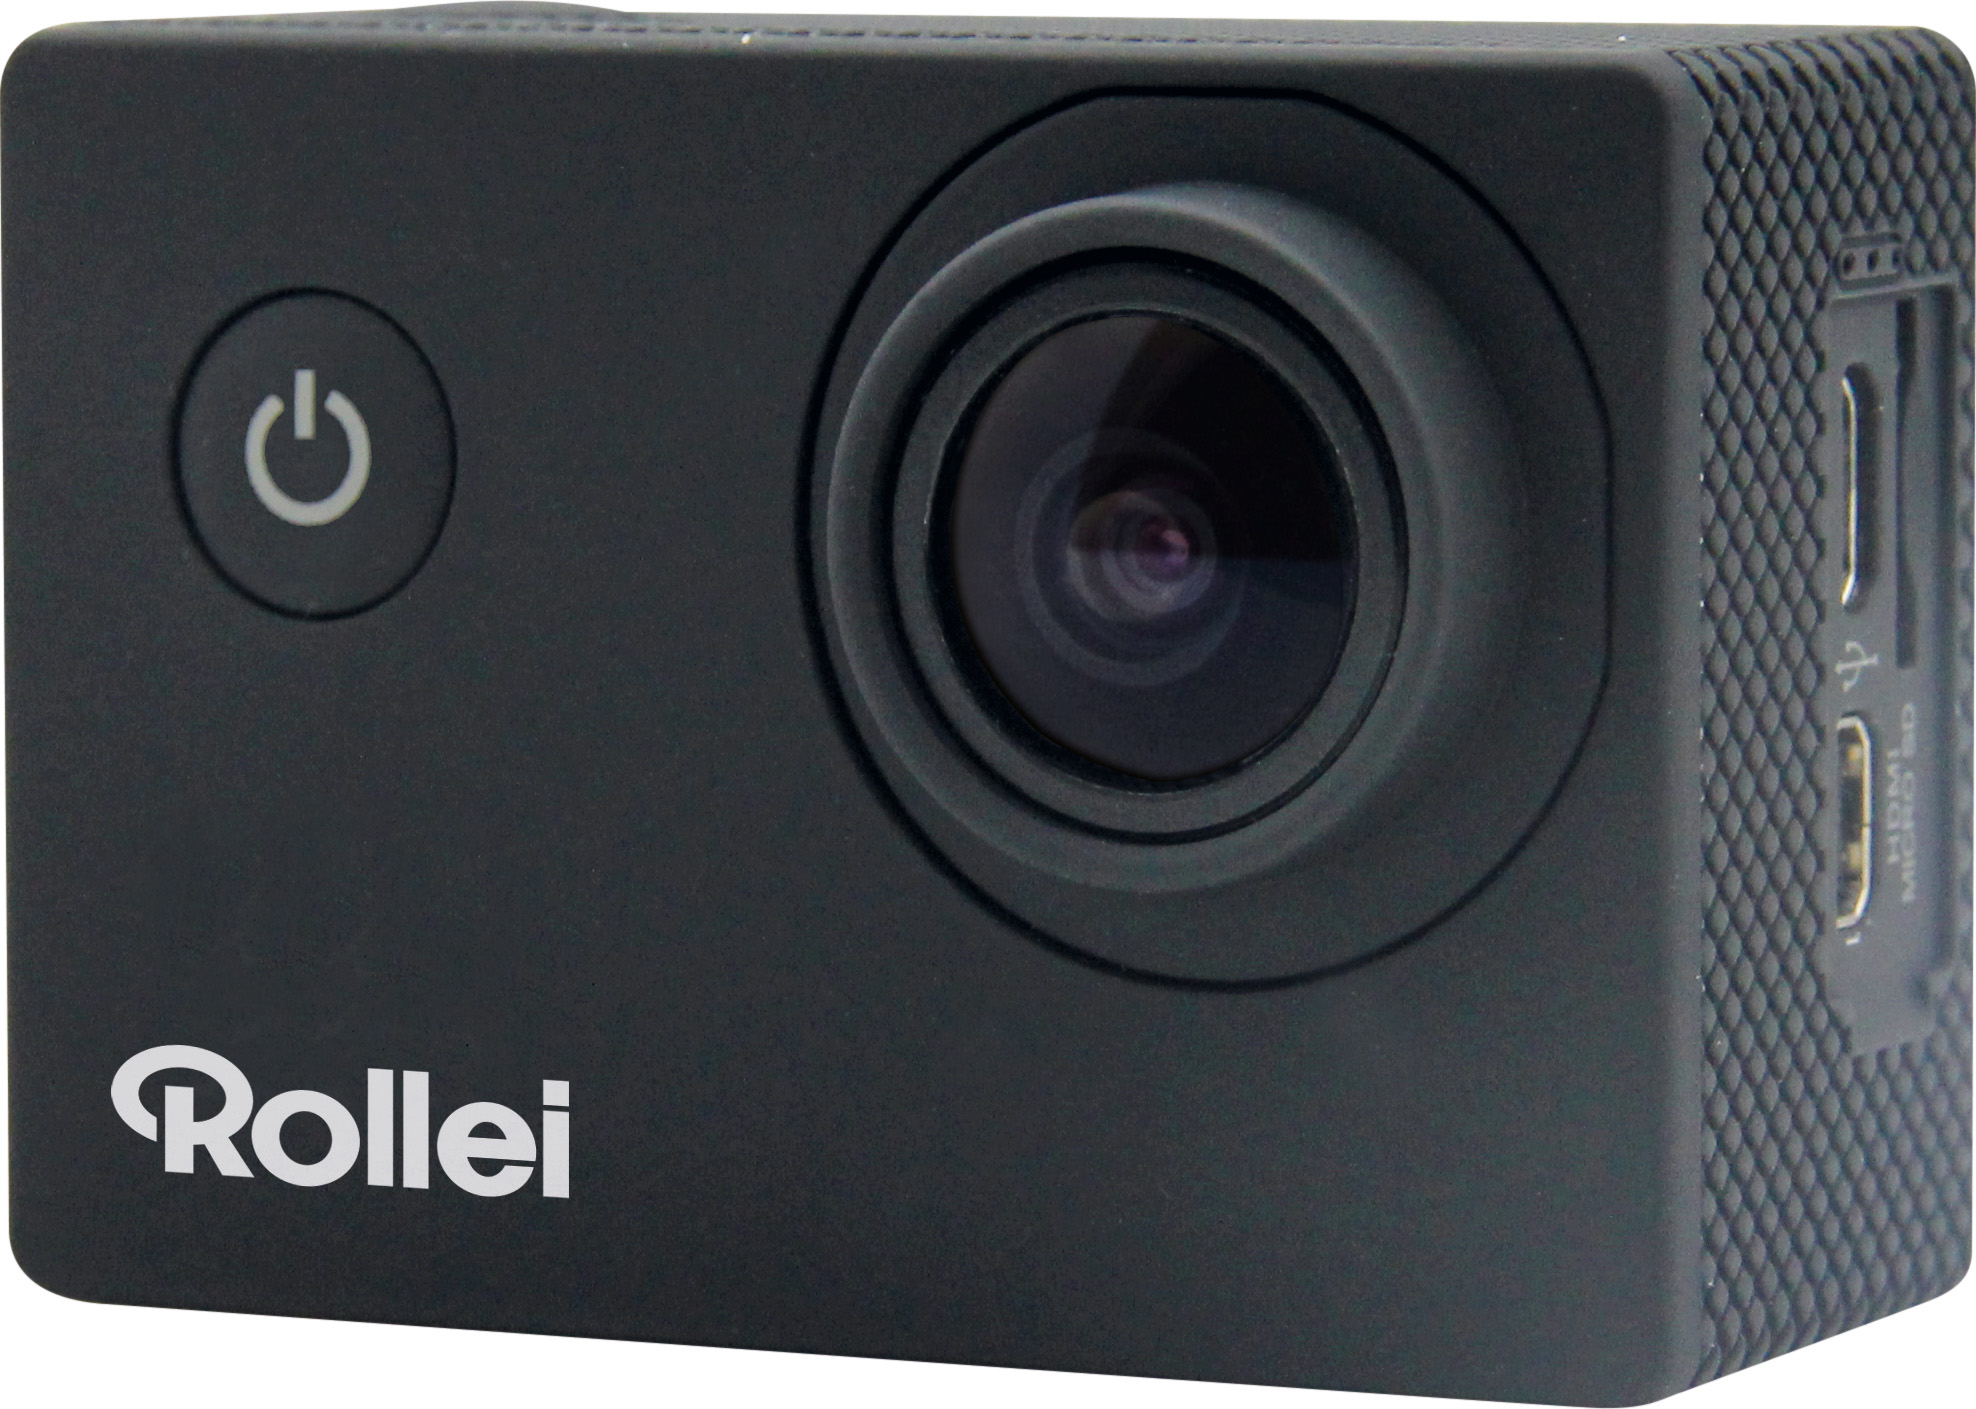 Digitální kamera Rollei ActionCam 300